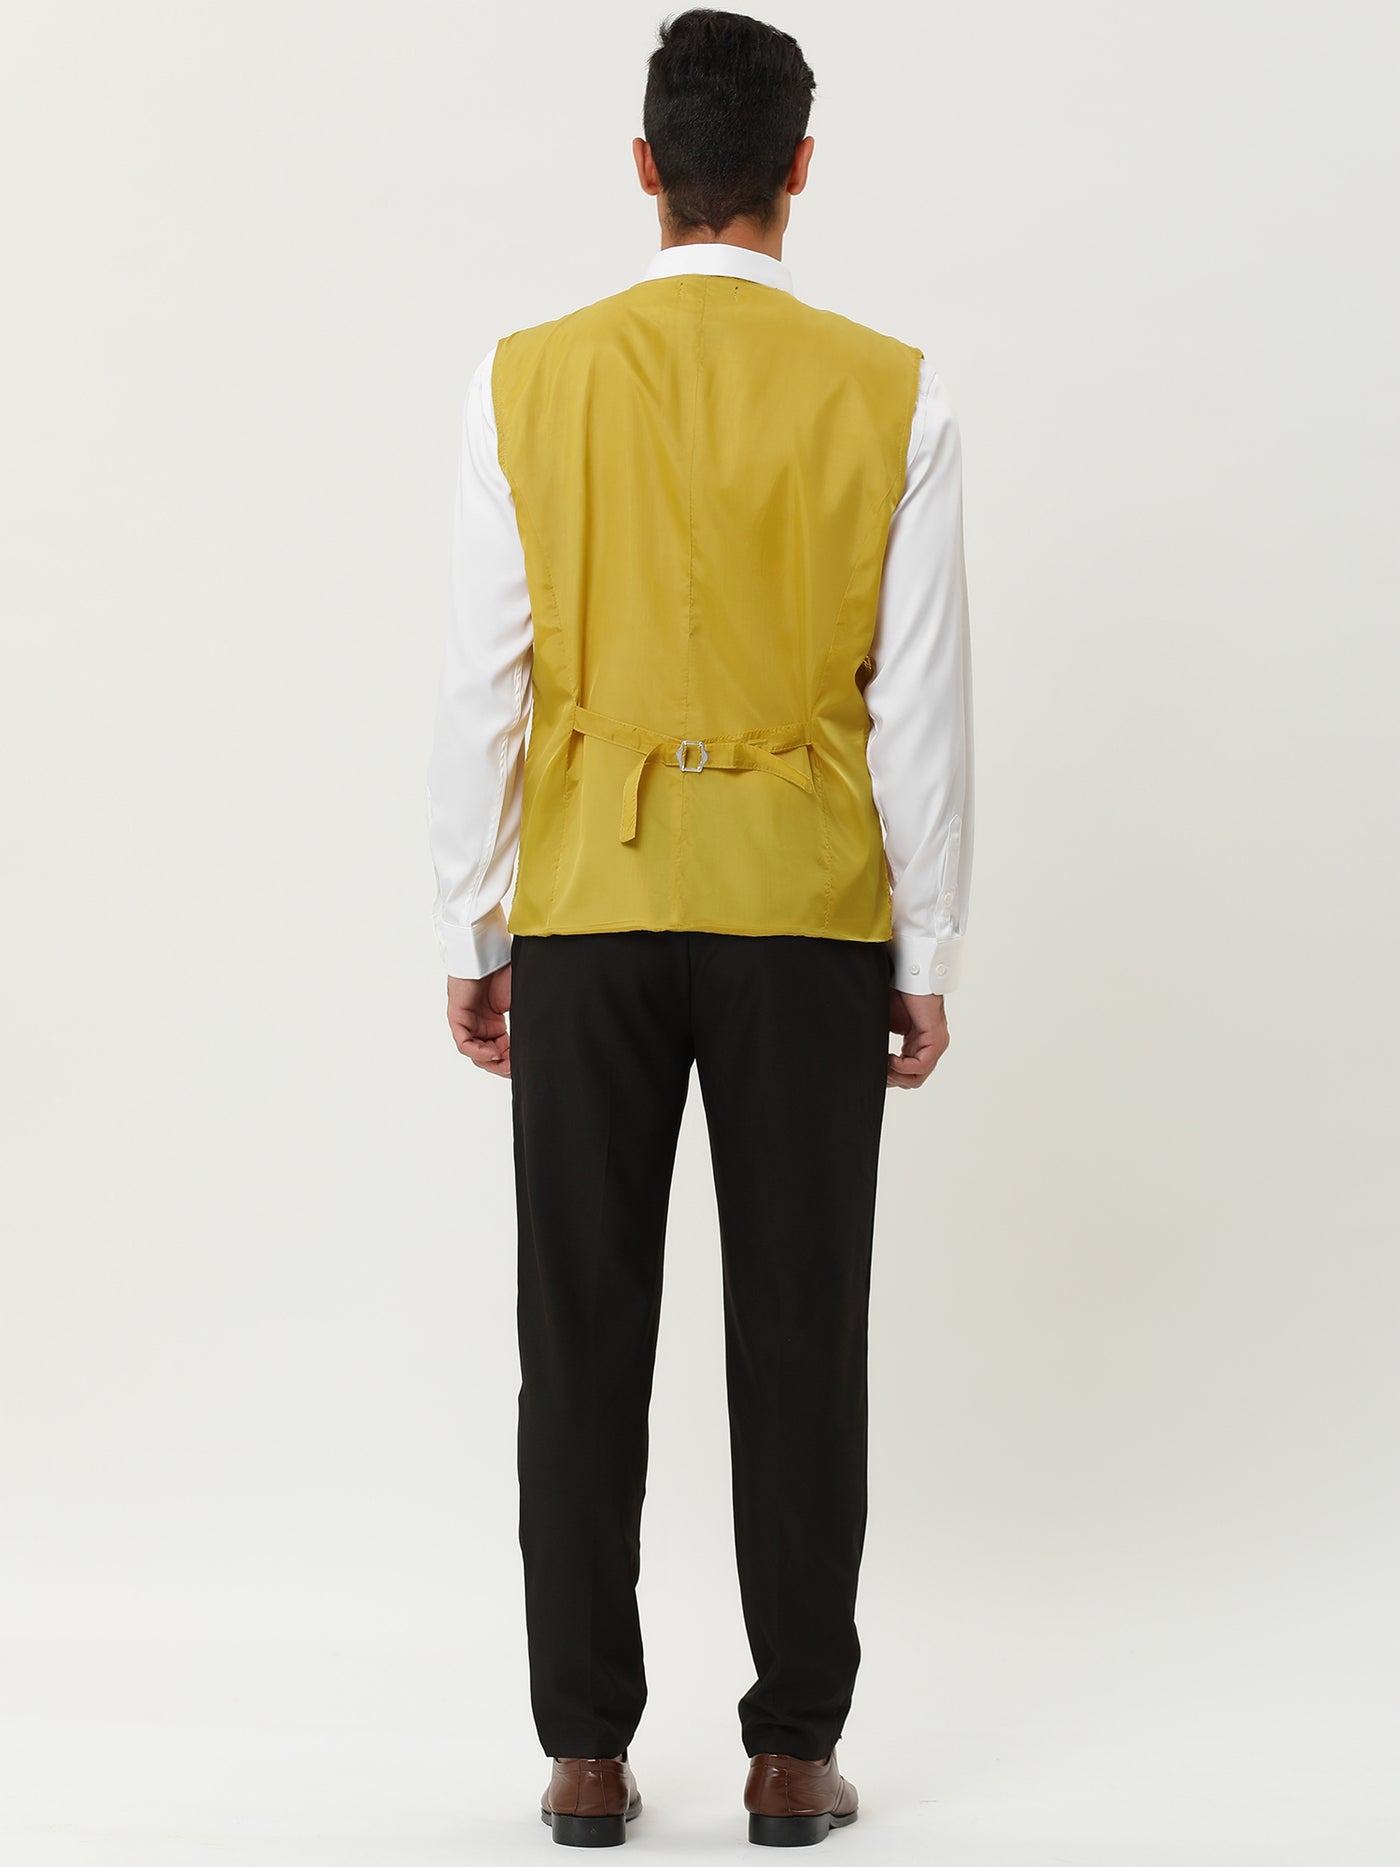 Bublédon Classic Sequin Shiny Single-breasted Party Suit Vest